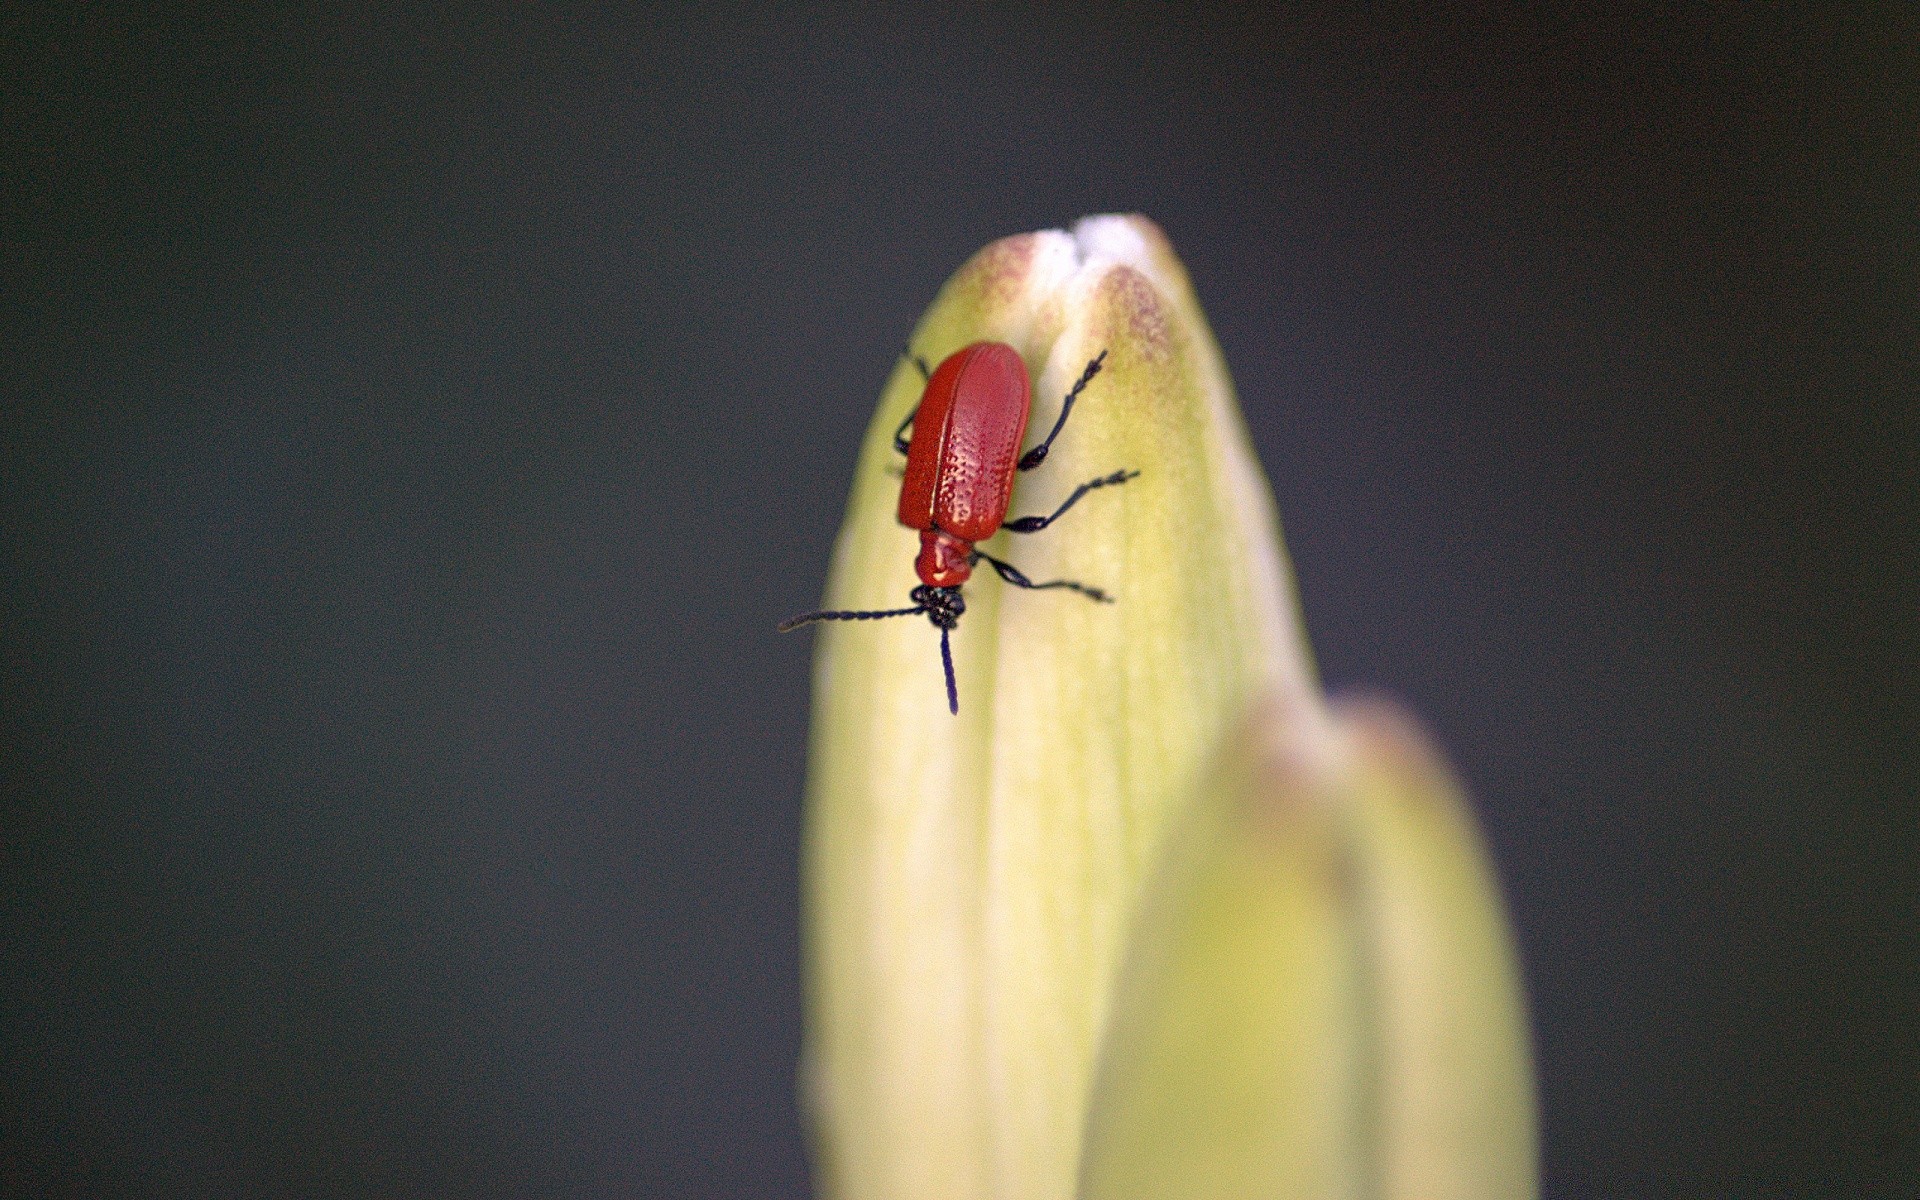 insects insect beetle ladybug invertebrate wildlife